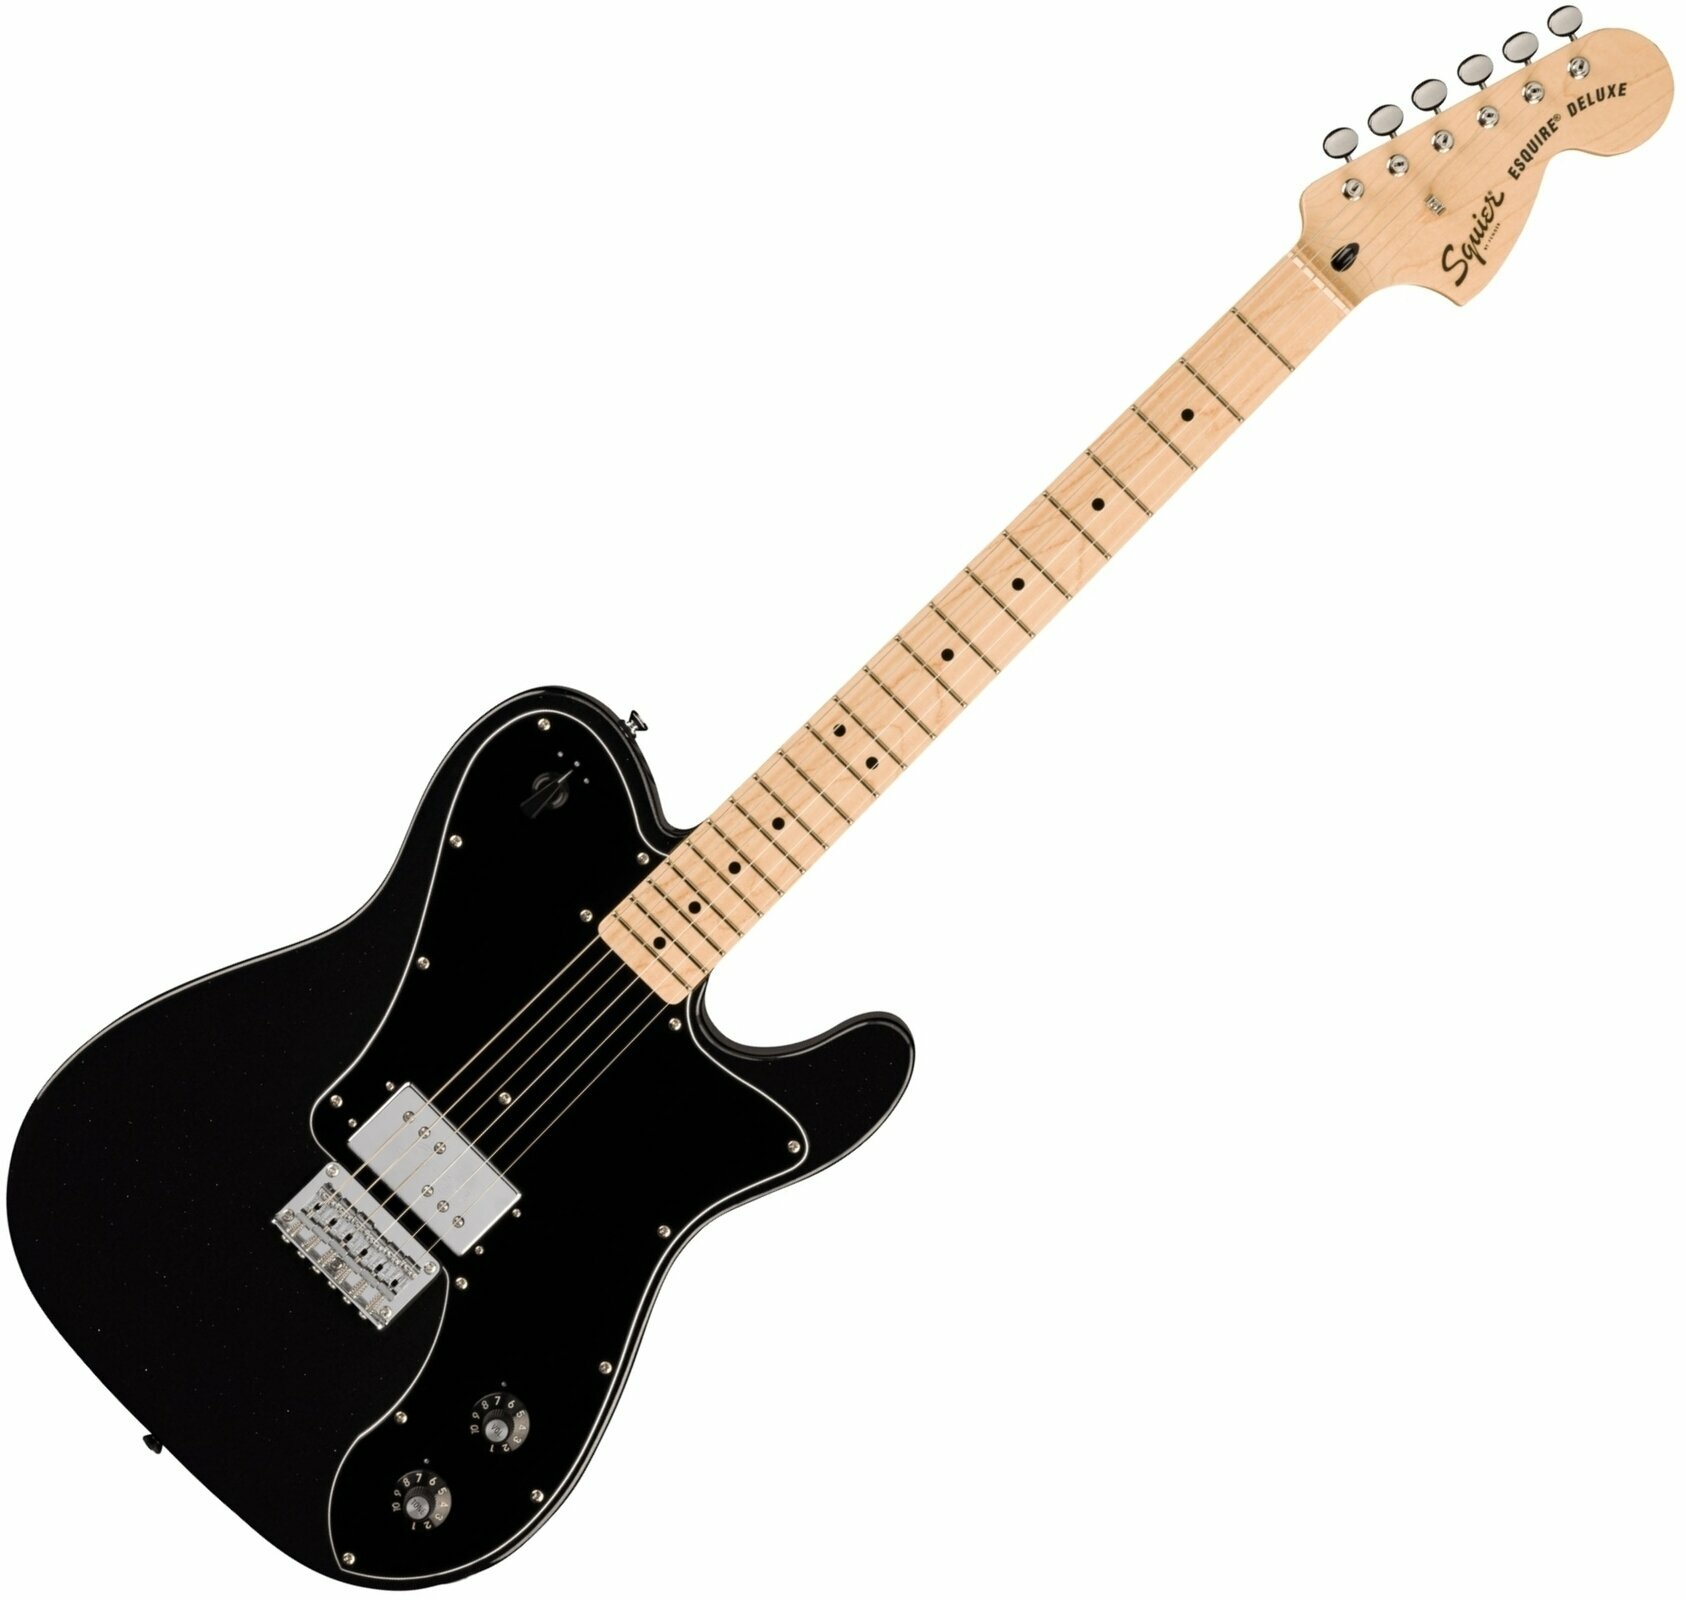 Fender Squier Paranormal Esquire Deluxe Metallic Black Fender Squier